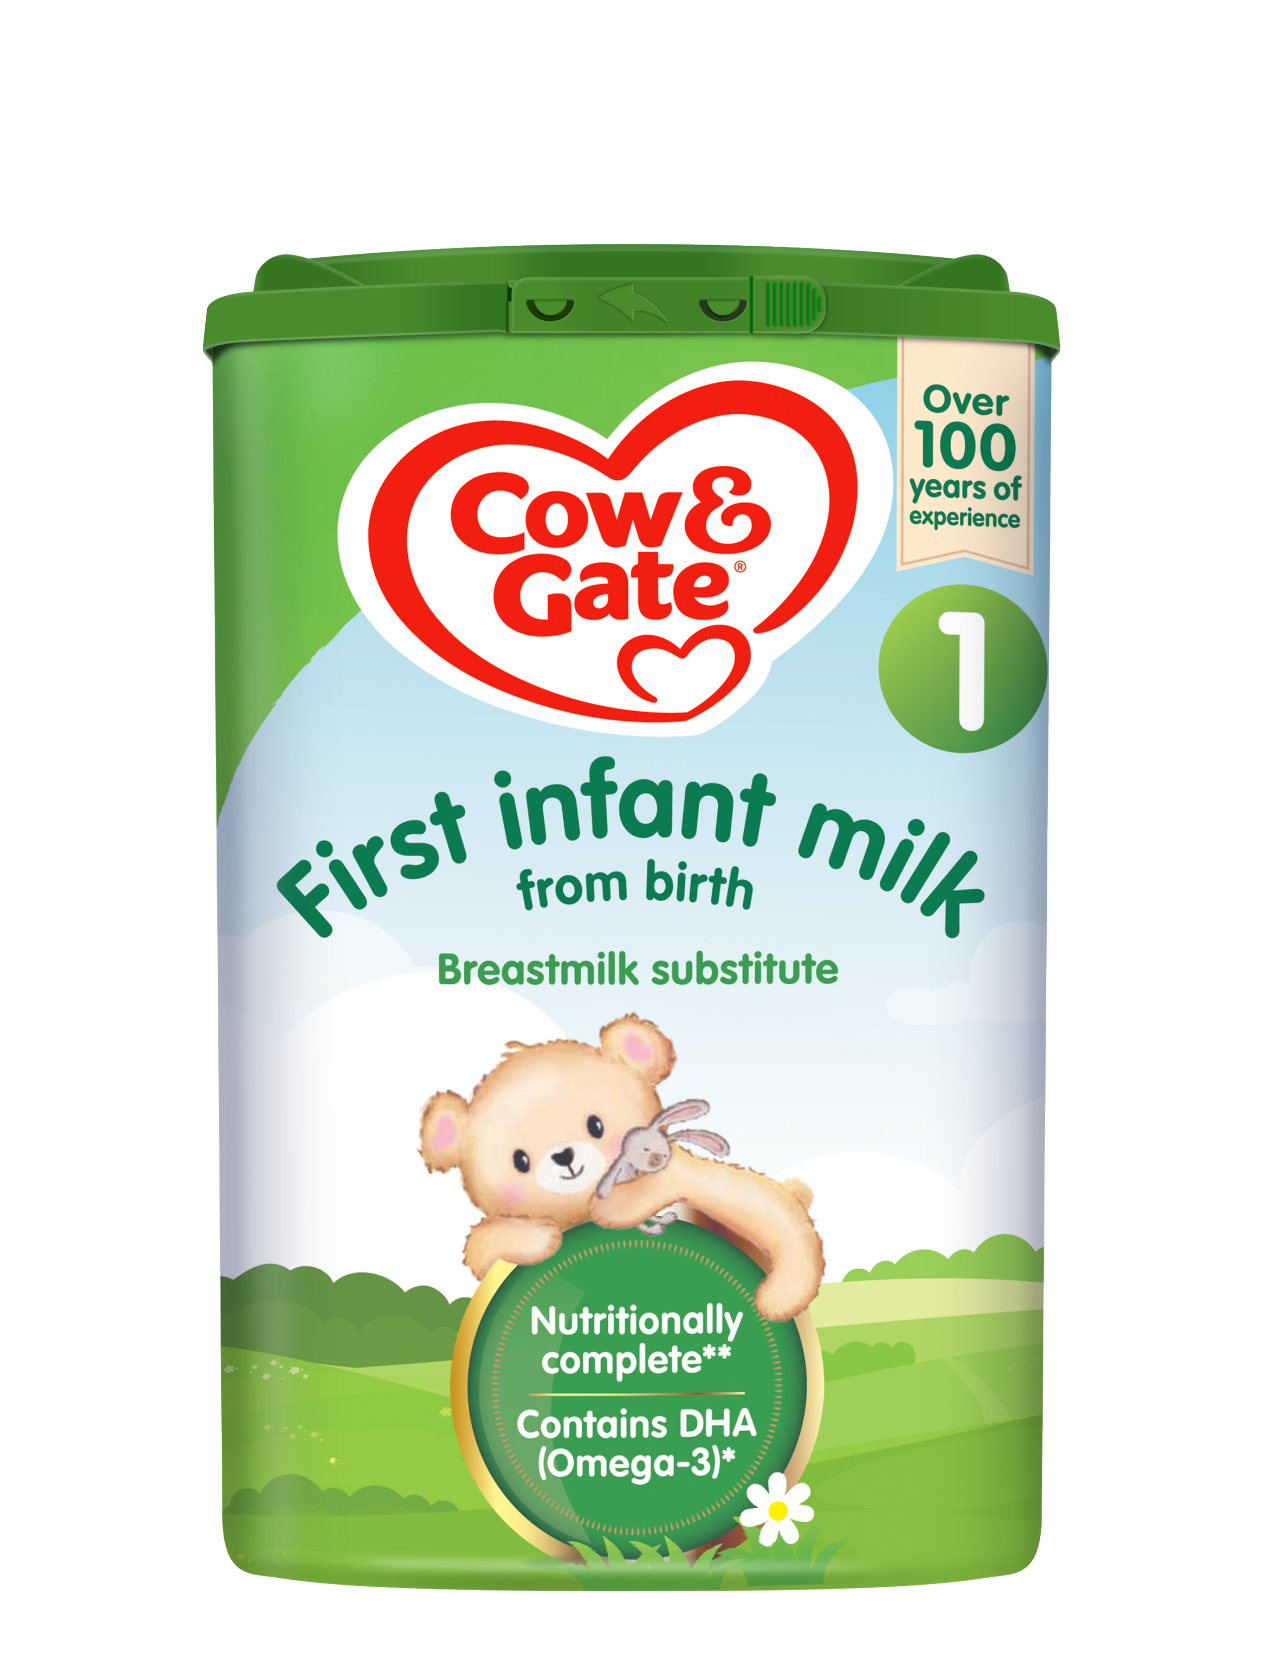 Cow & Gate First Infant milk (Powder)